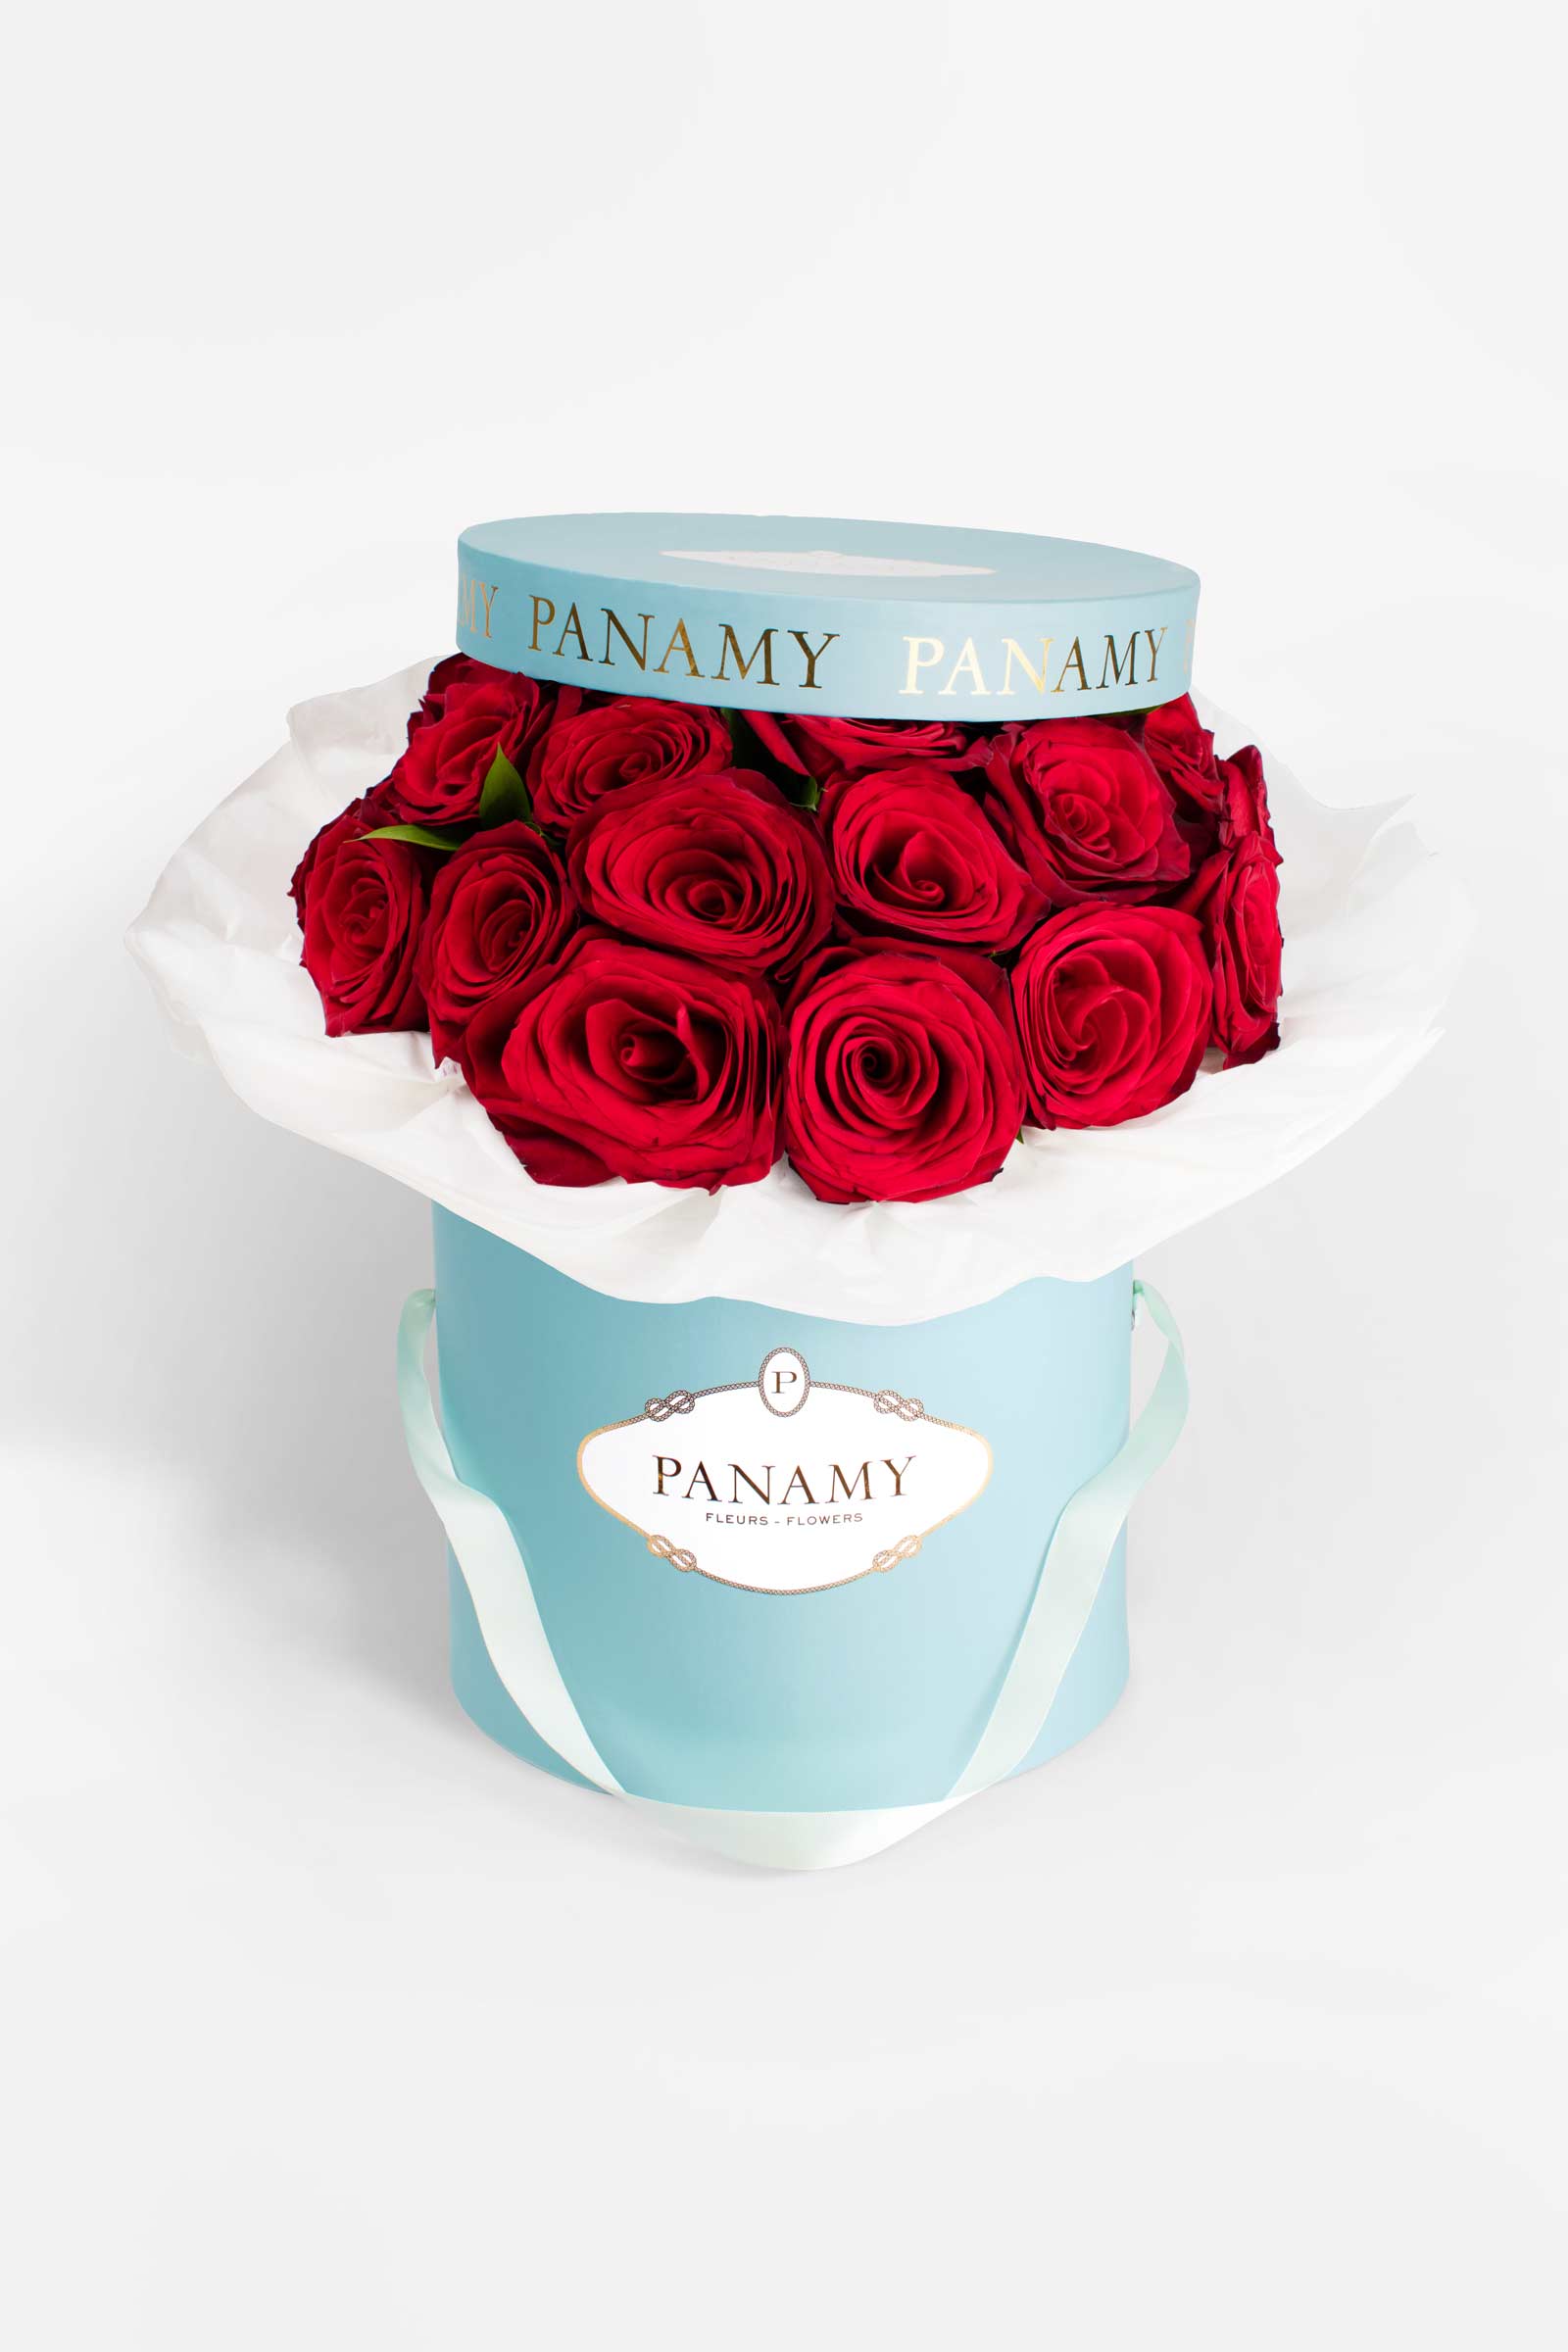 Il Classico Rosso - Flower Bouquet - Monochrome Collection - PANAMY Flower Delivery in Switzerland, Geneva, Zürich, Basel